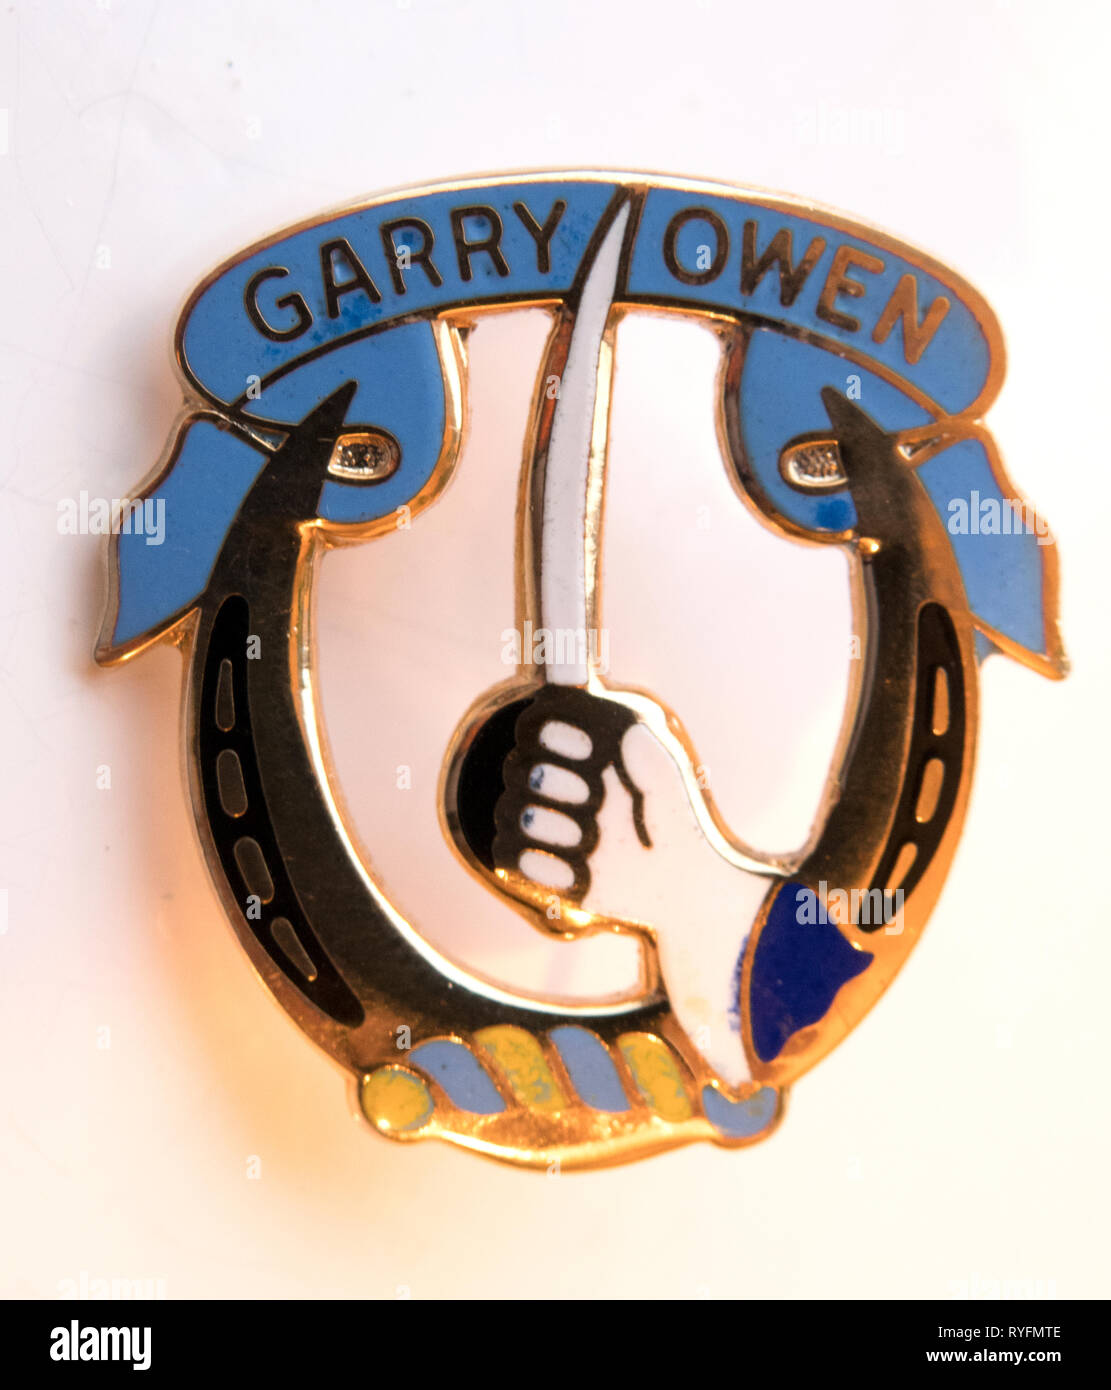 Garry Owen 7th Cavalry Regiment Large Lapel hat pin badge Stock Photo